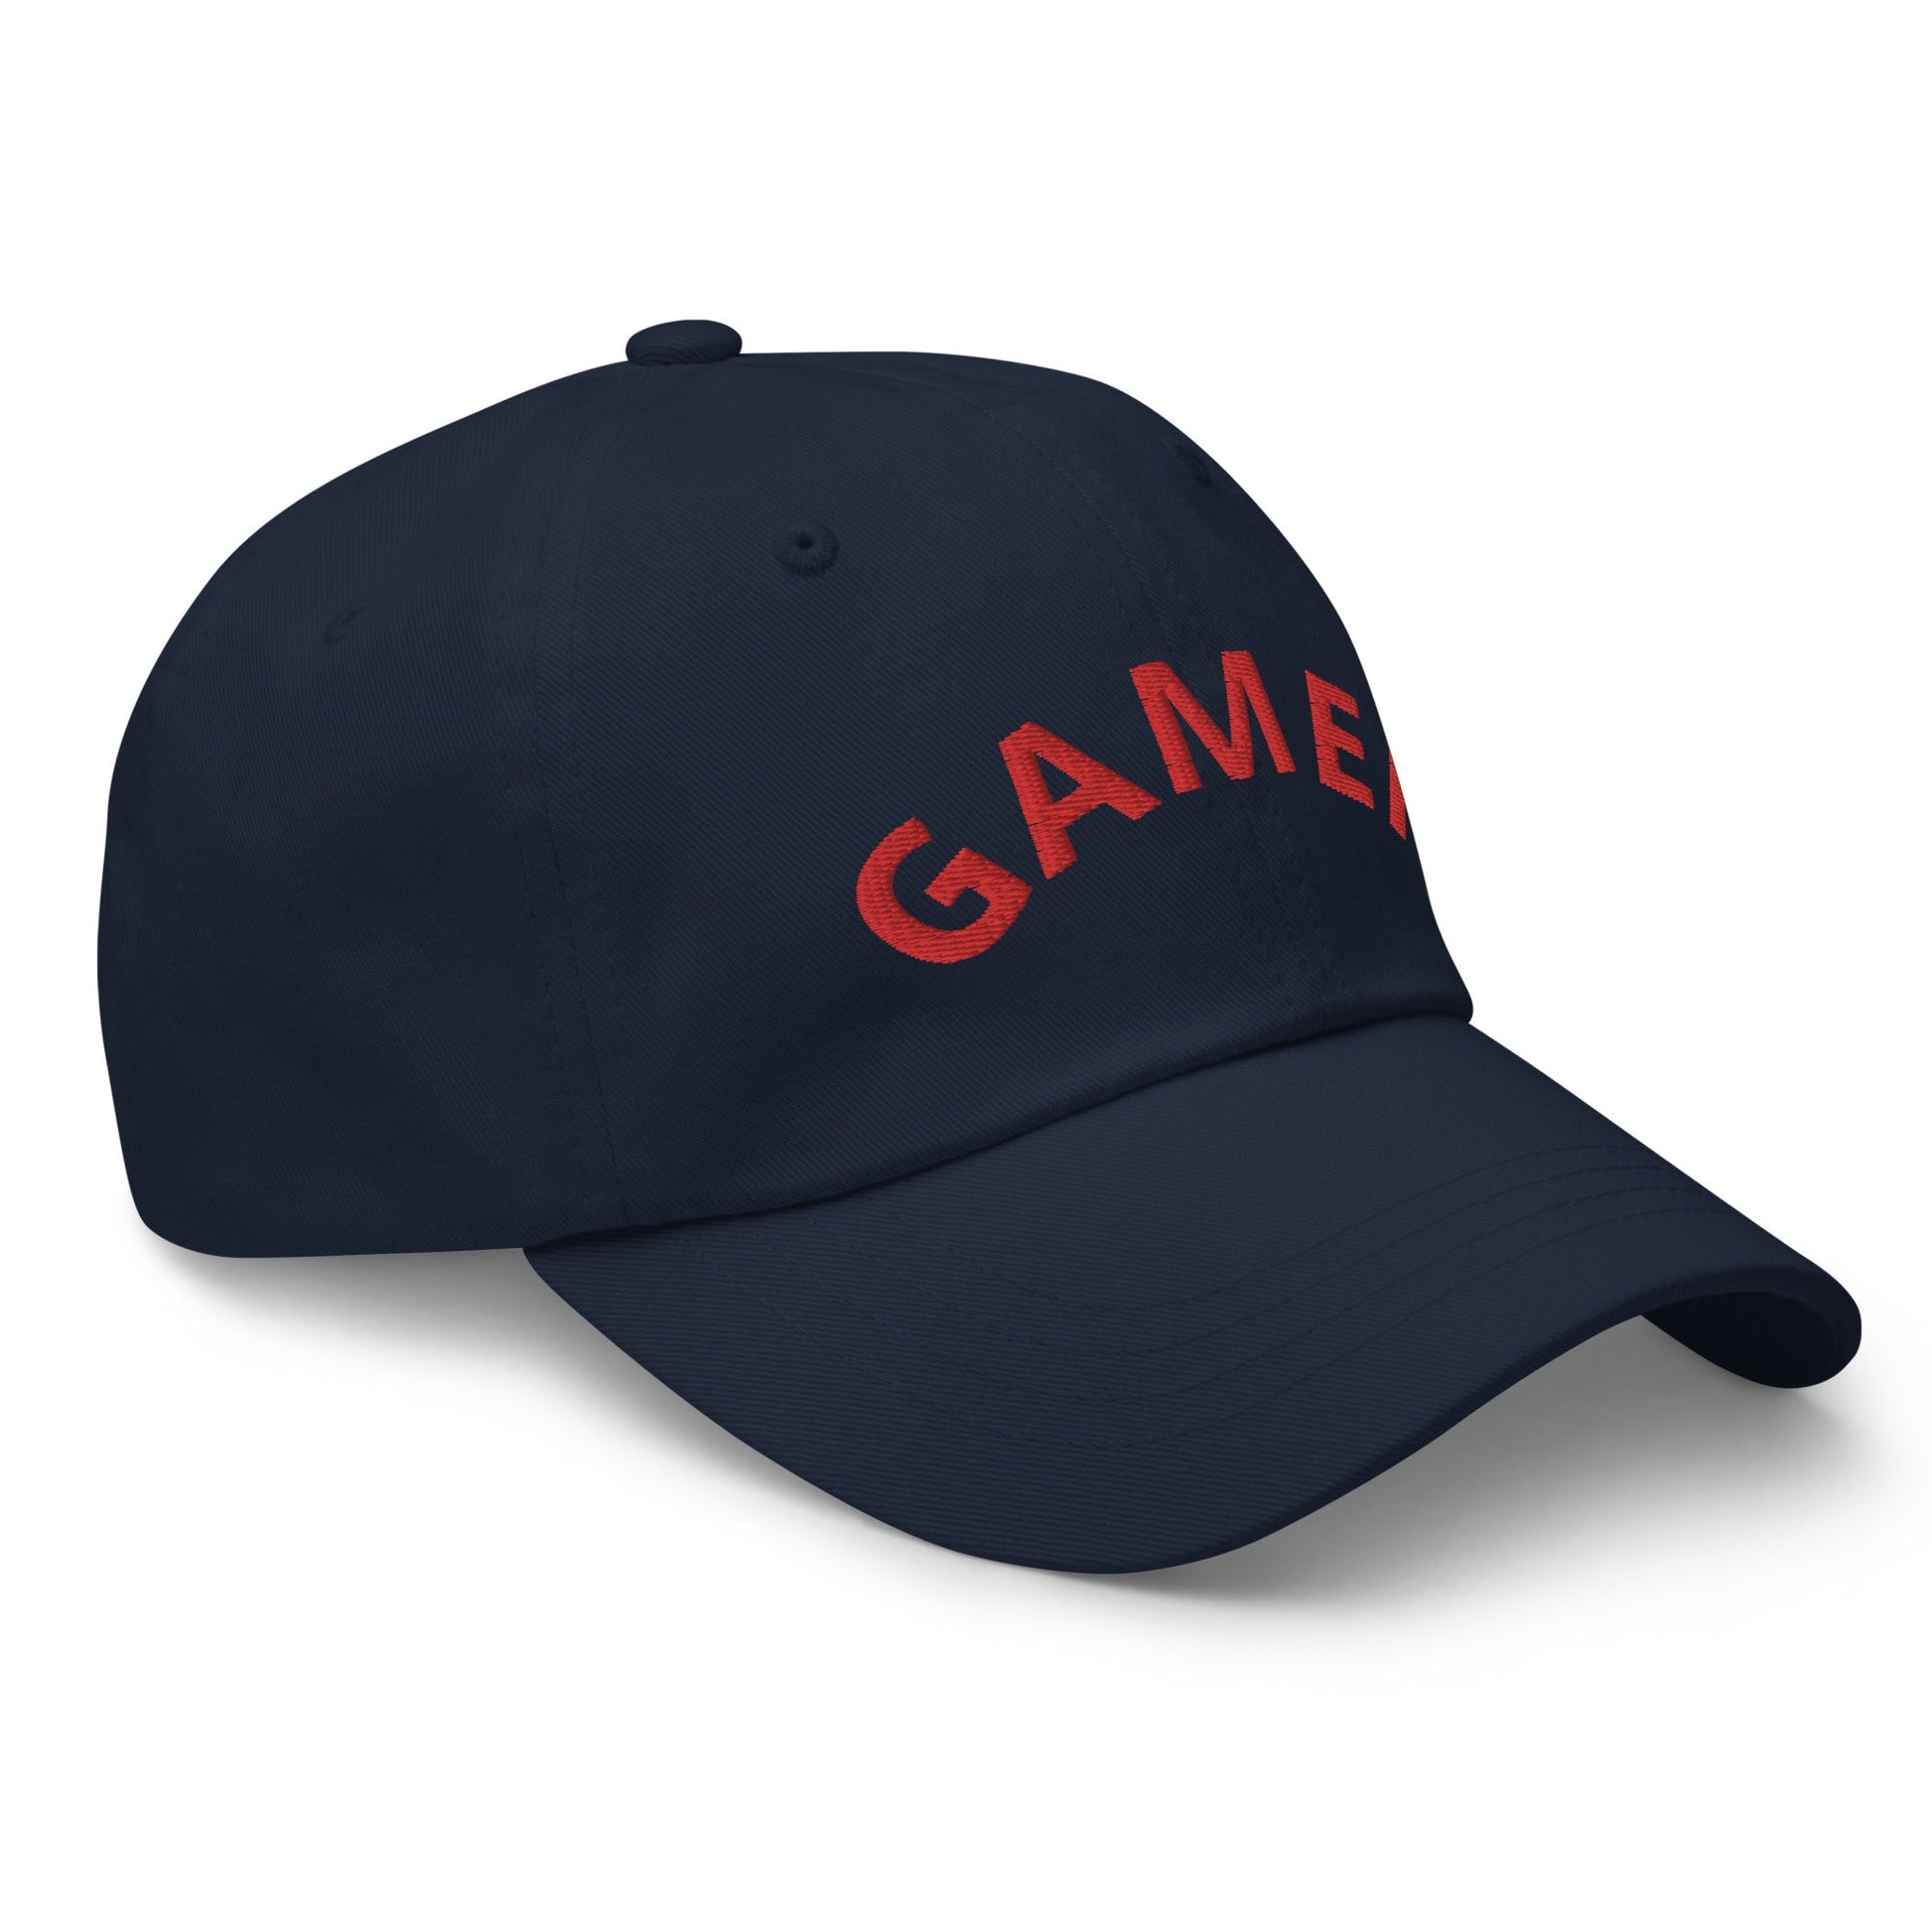 Red GAMER | Dad hat